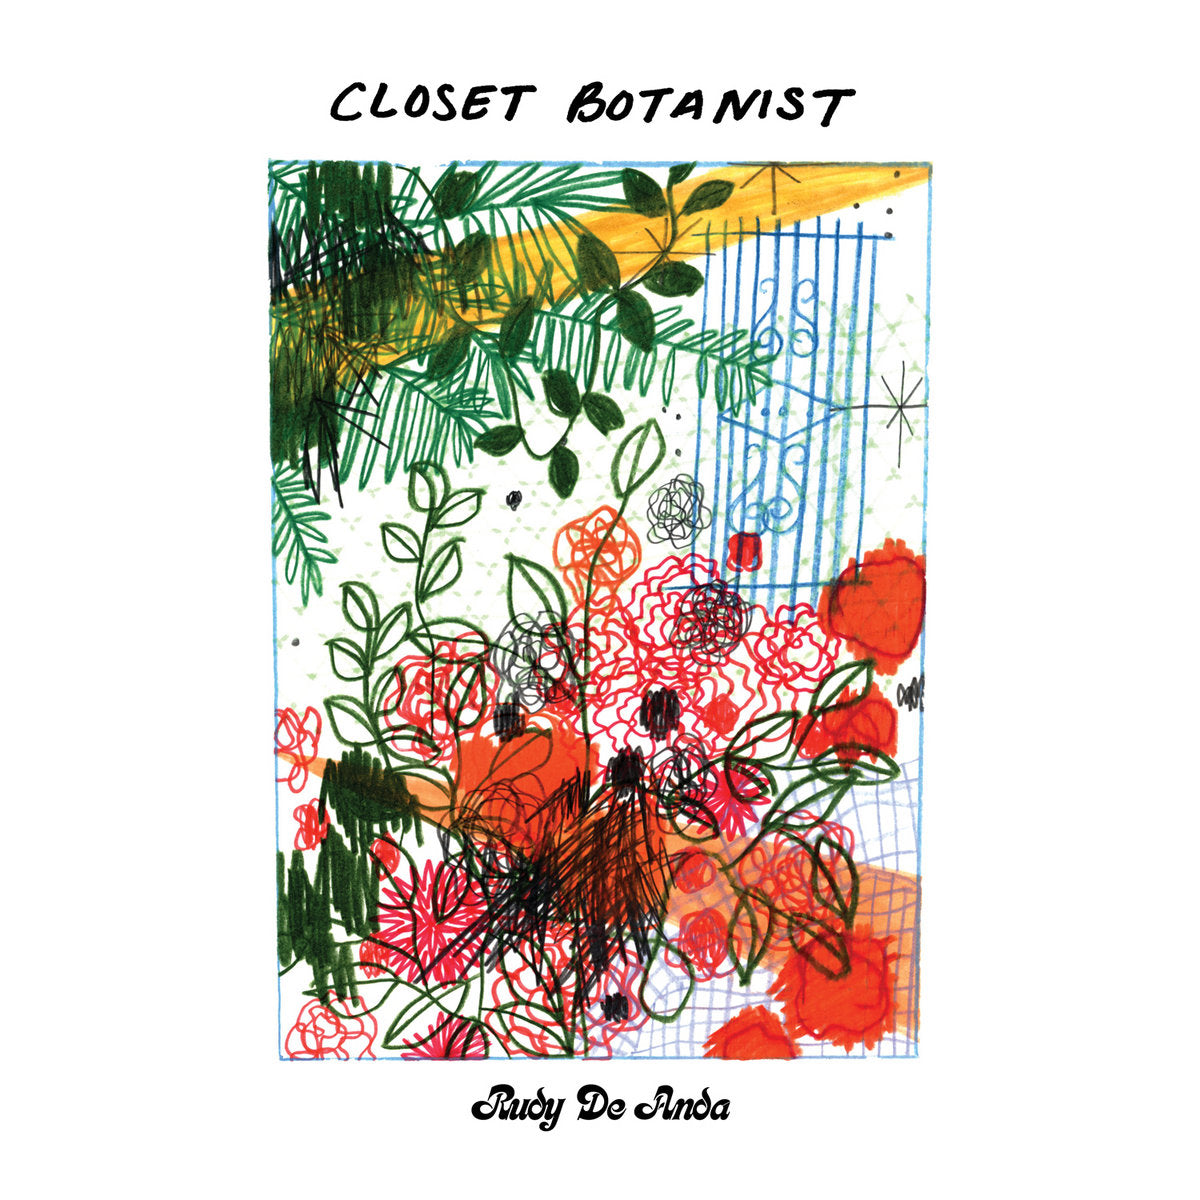 Closet Botanist (New LP)